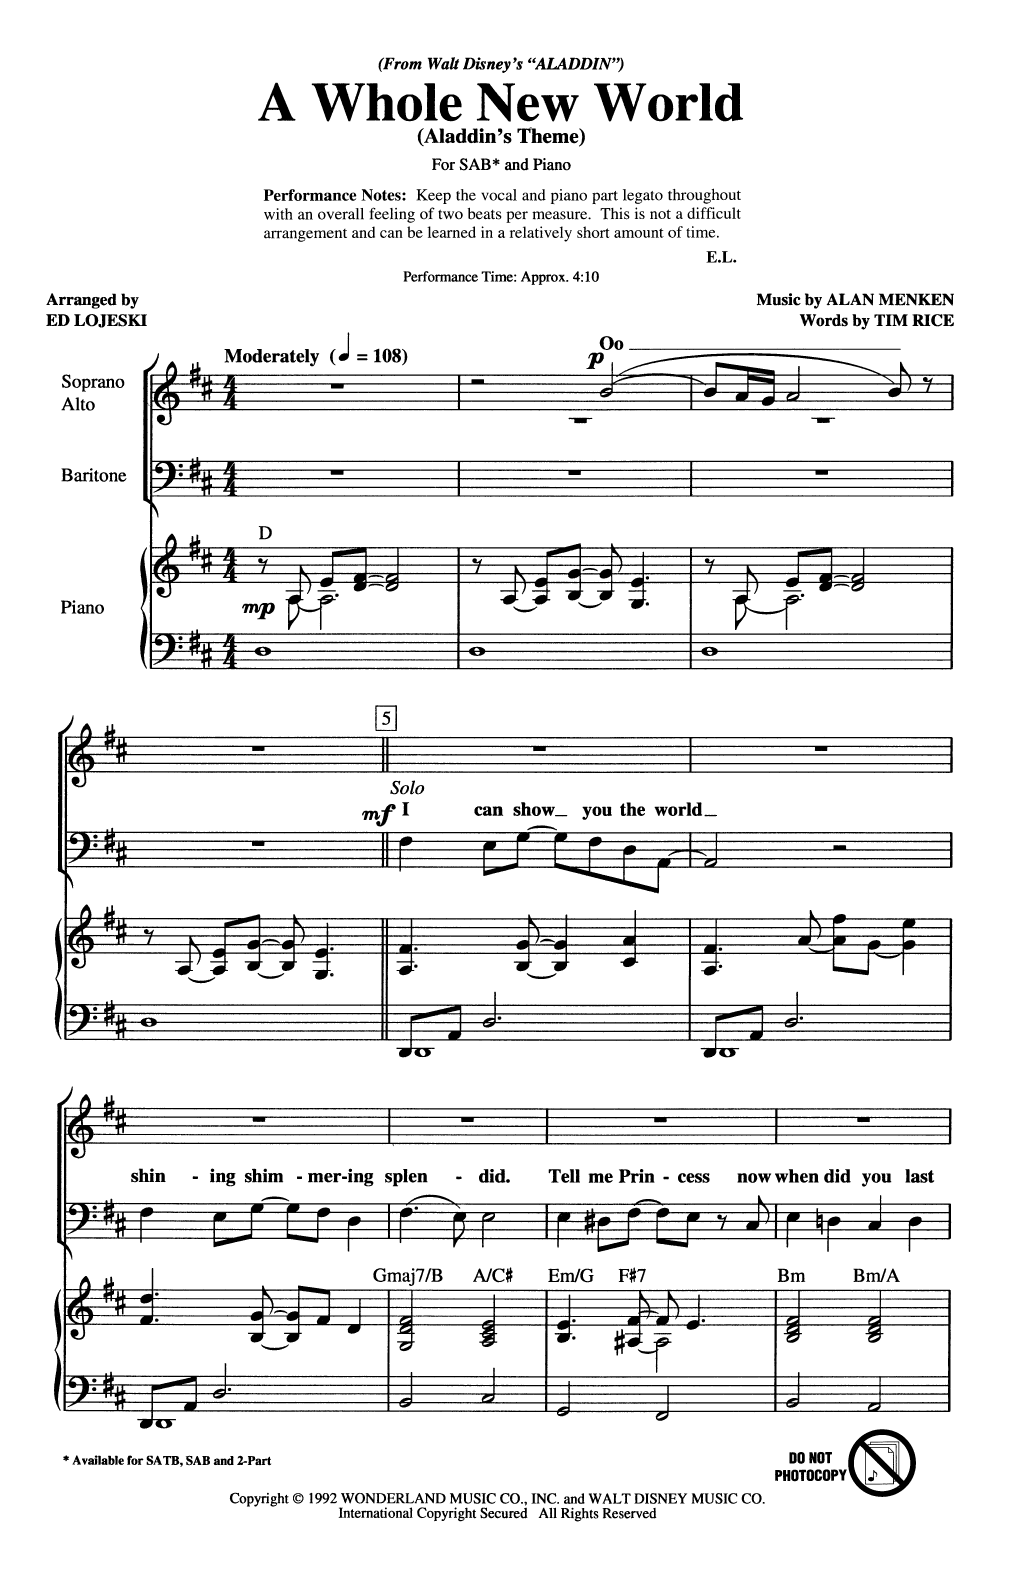 Alan Menken A Whole New World (Aladdin's Theme) (from Disney's Aladdin) (arr. Ed Lojeski) Sheet Music Notes & Chords for SAB Choir - Download or Print PDF